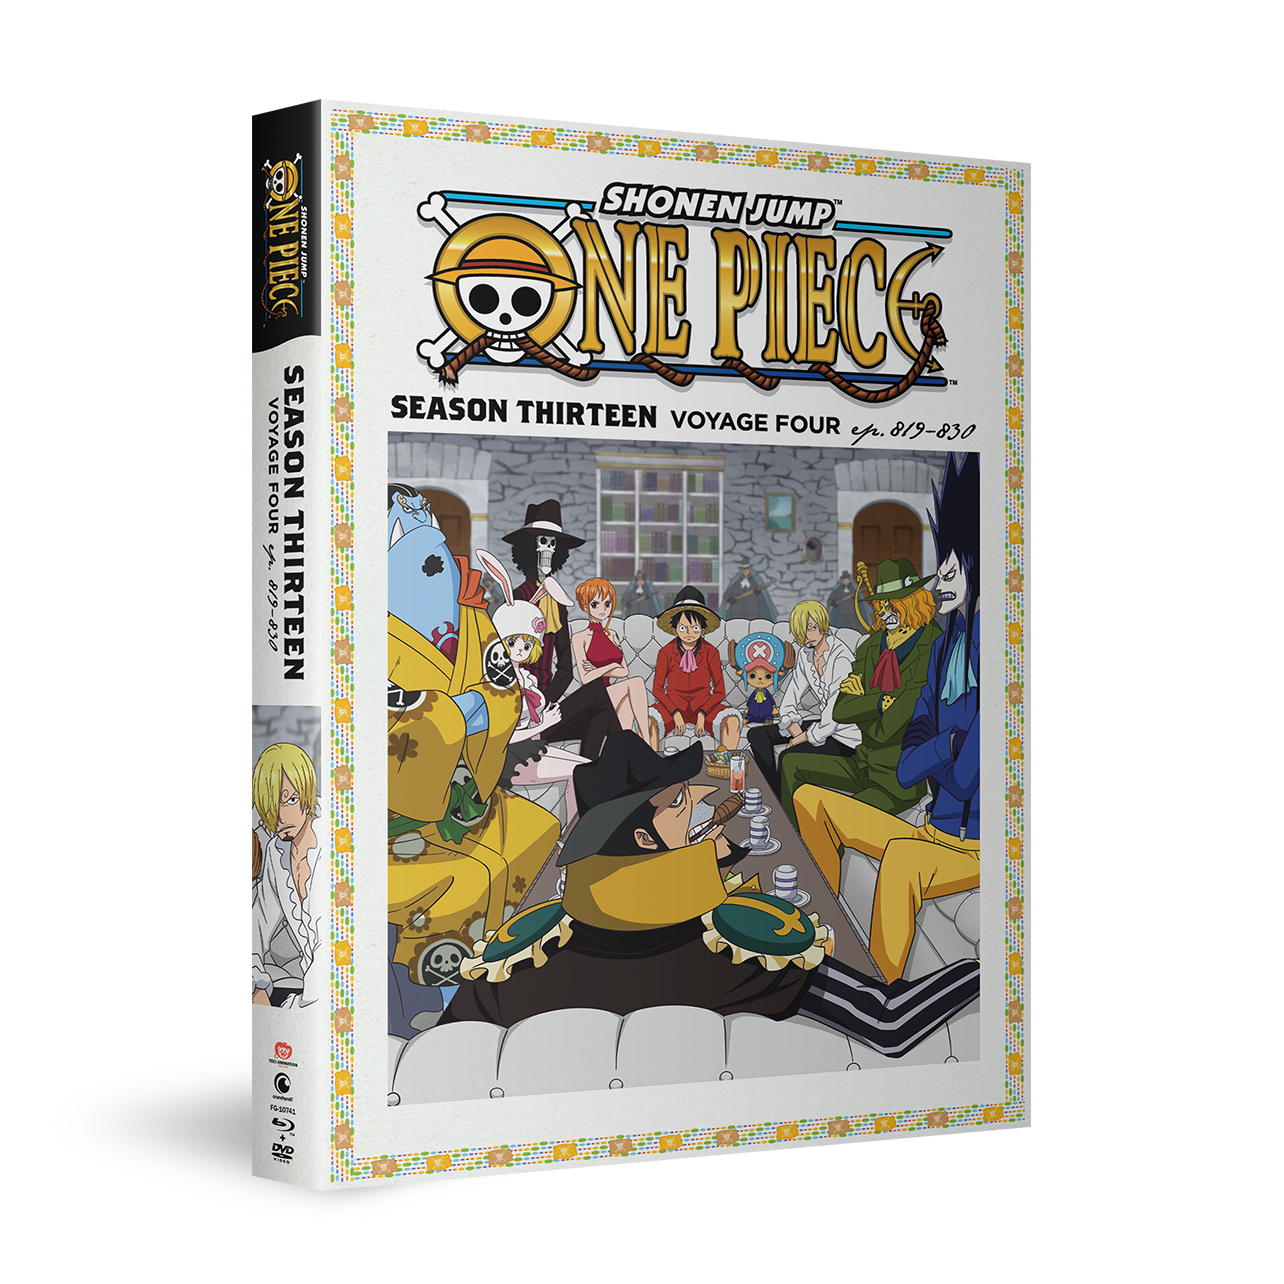 One Piece - Season 13 Voyage 4 - Blu-ray + DVD image count 1